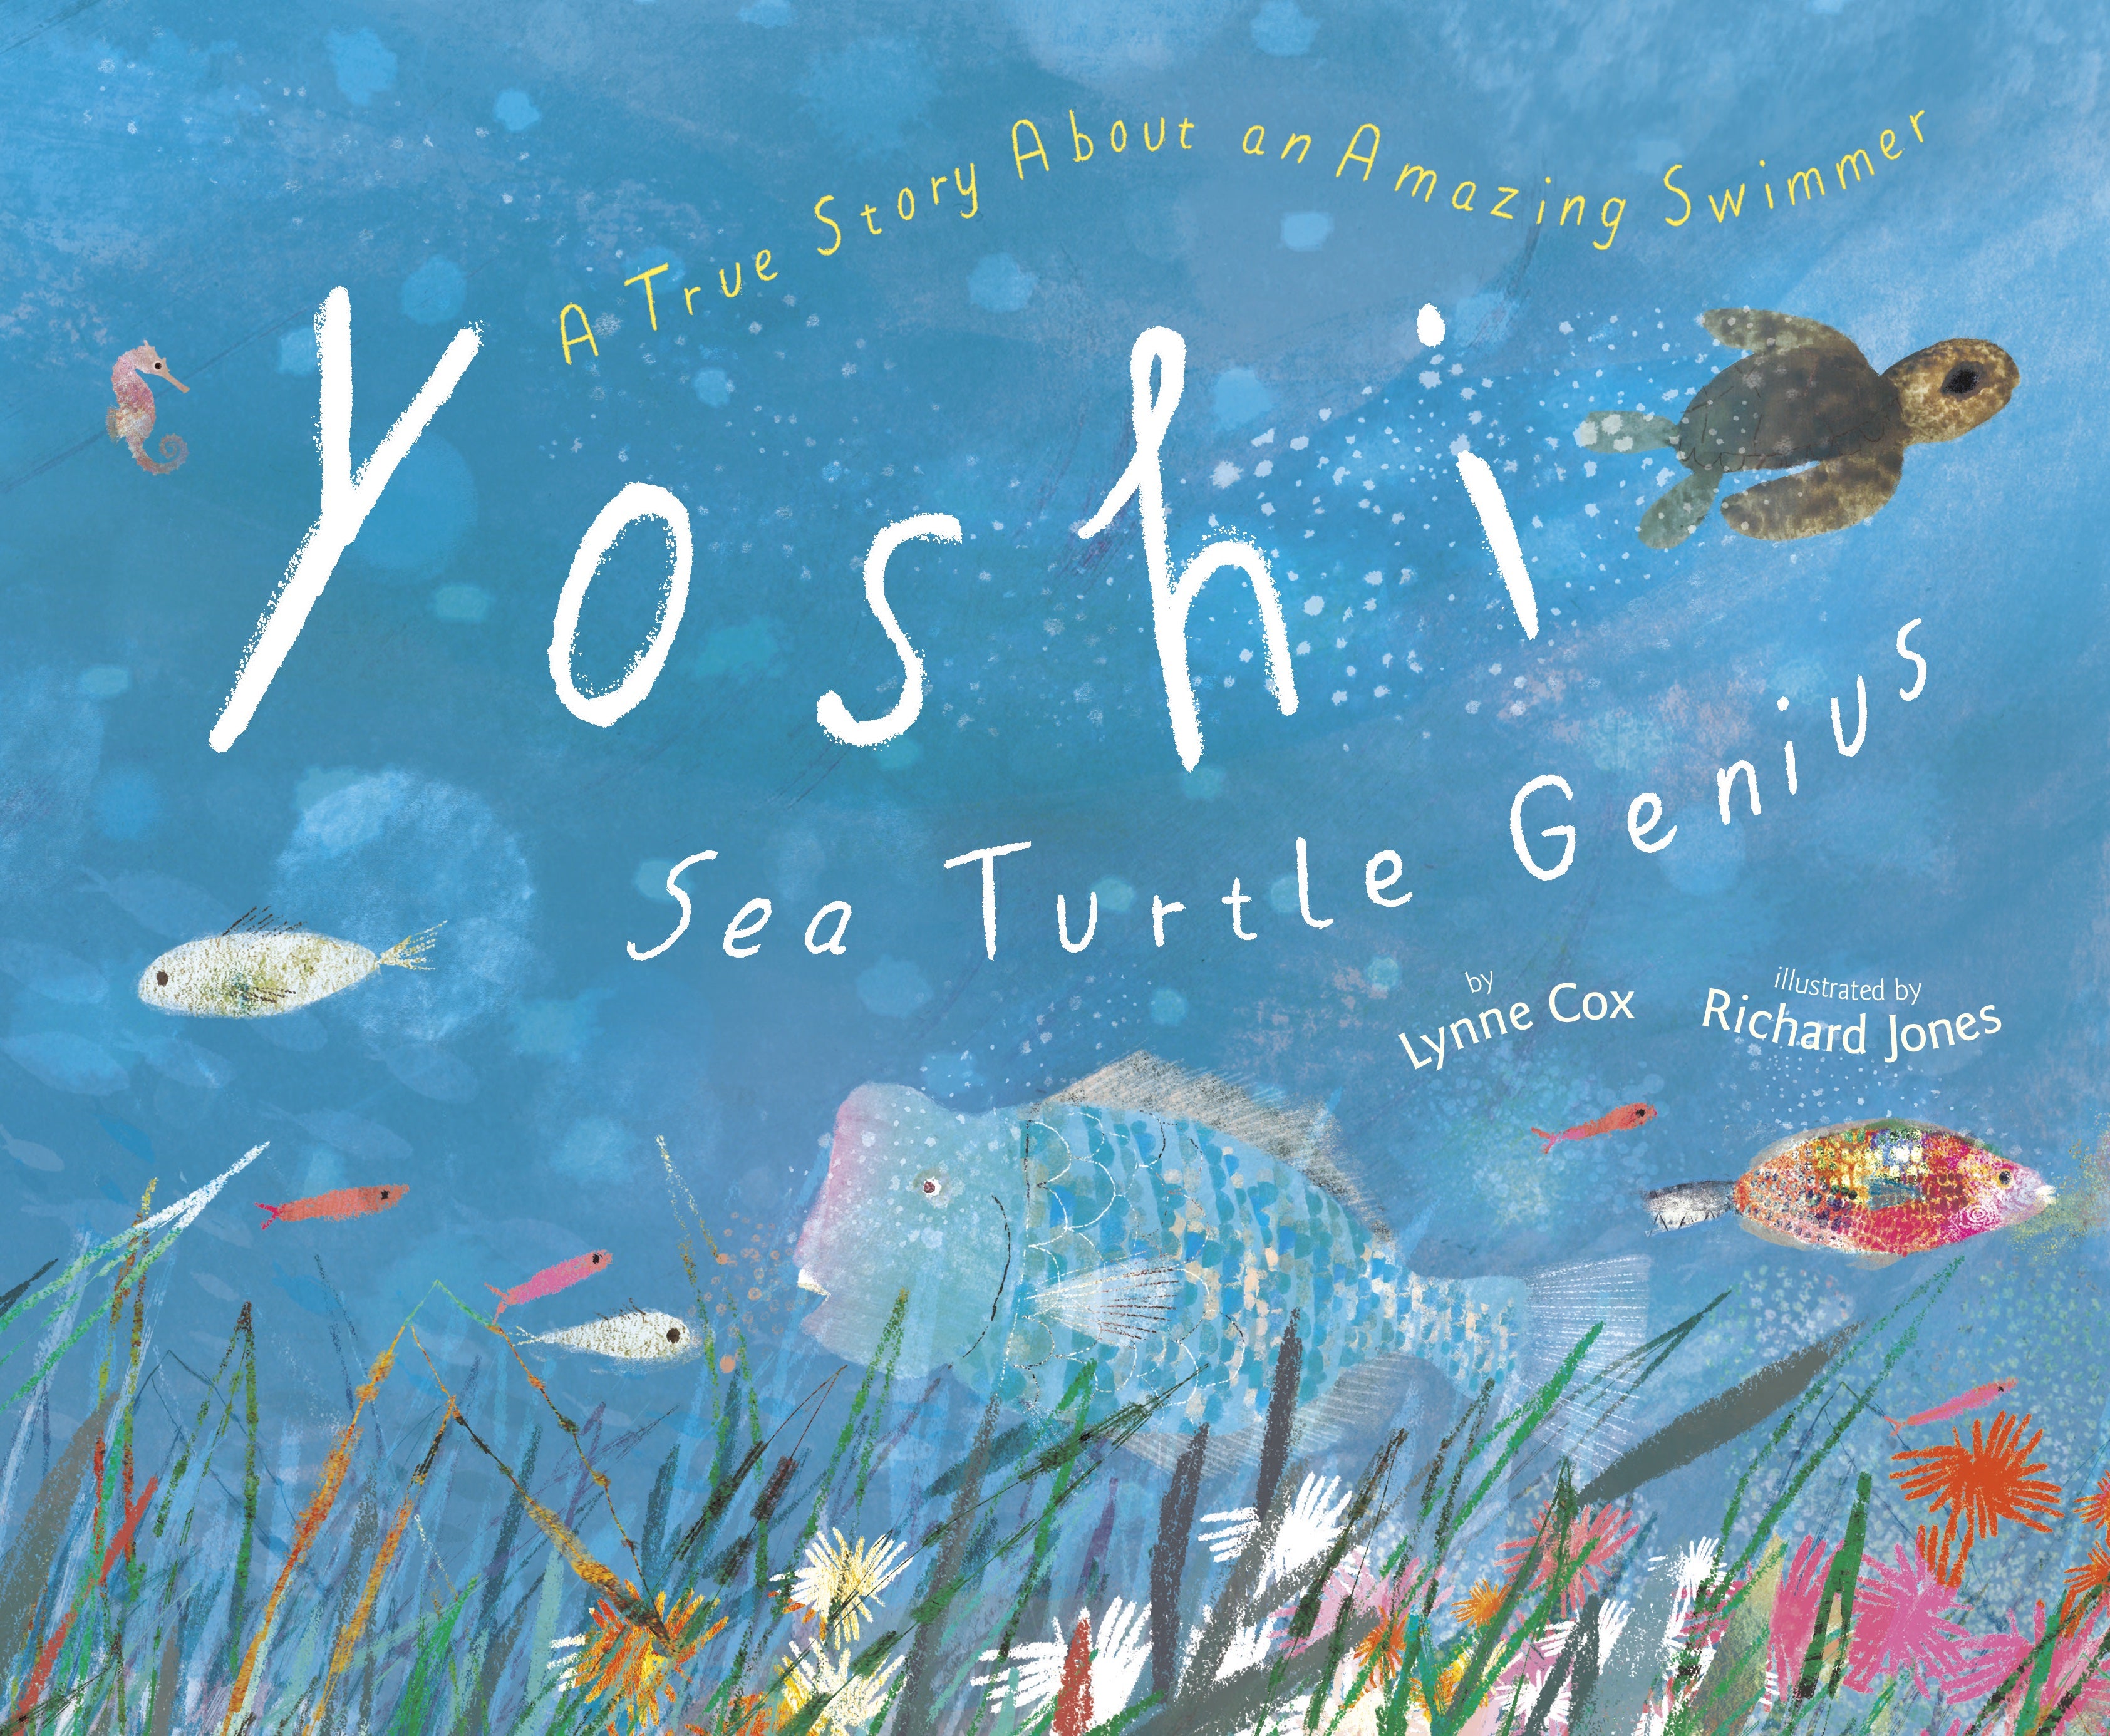 Yoshi, Sea Turtle Genius